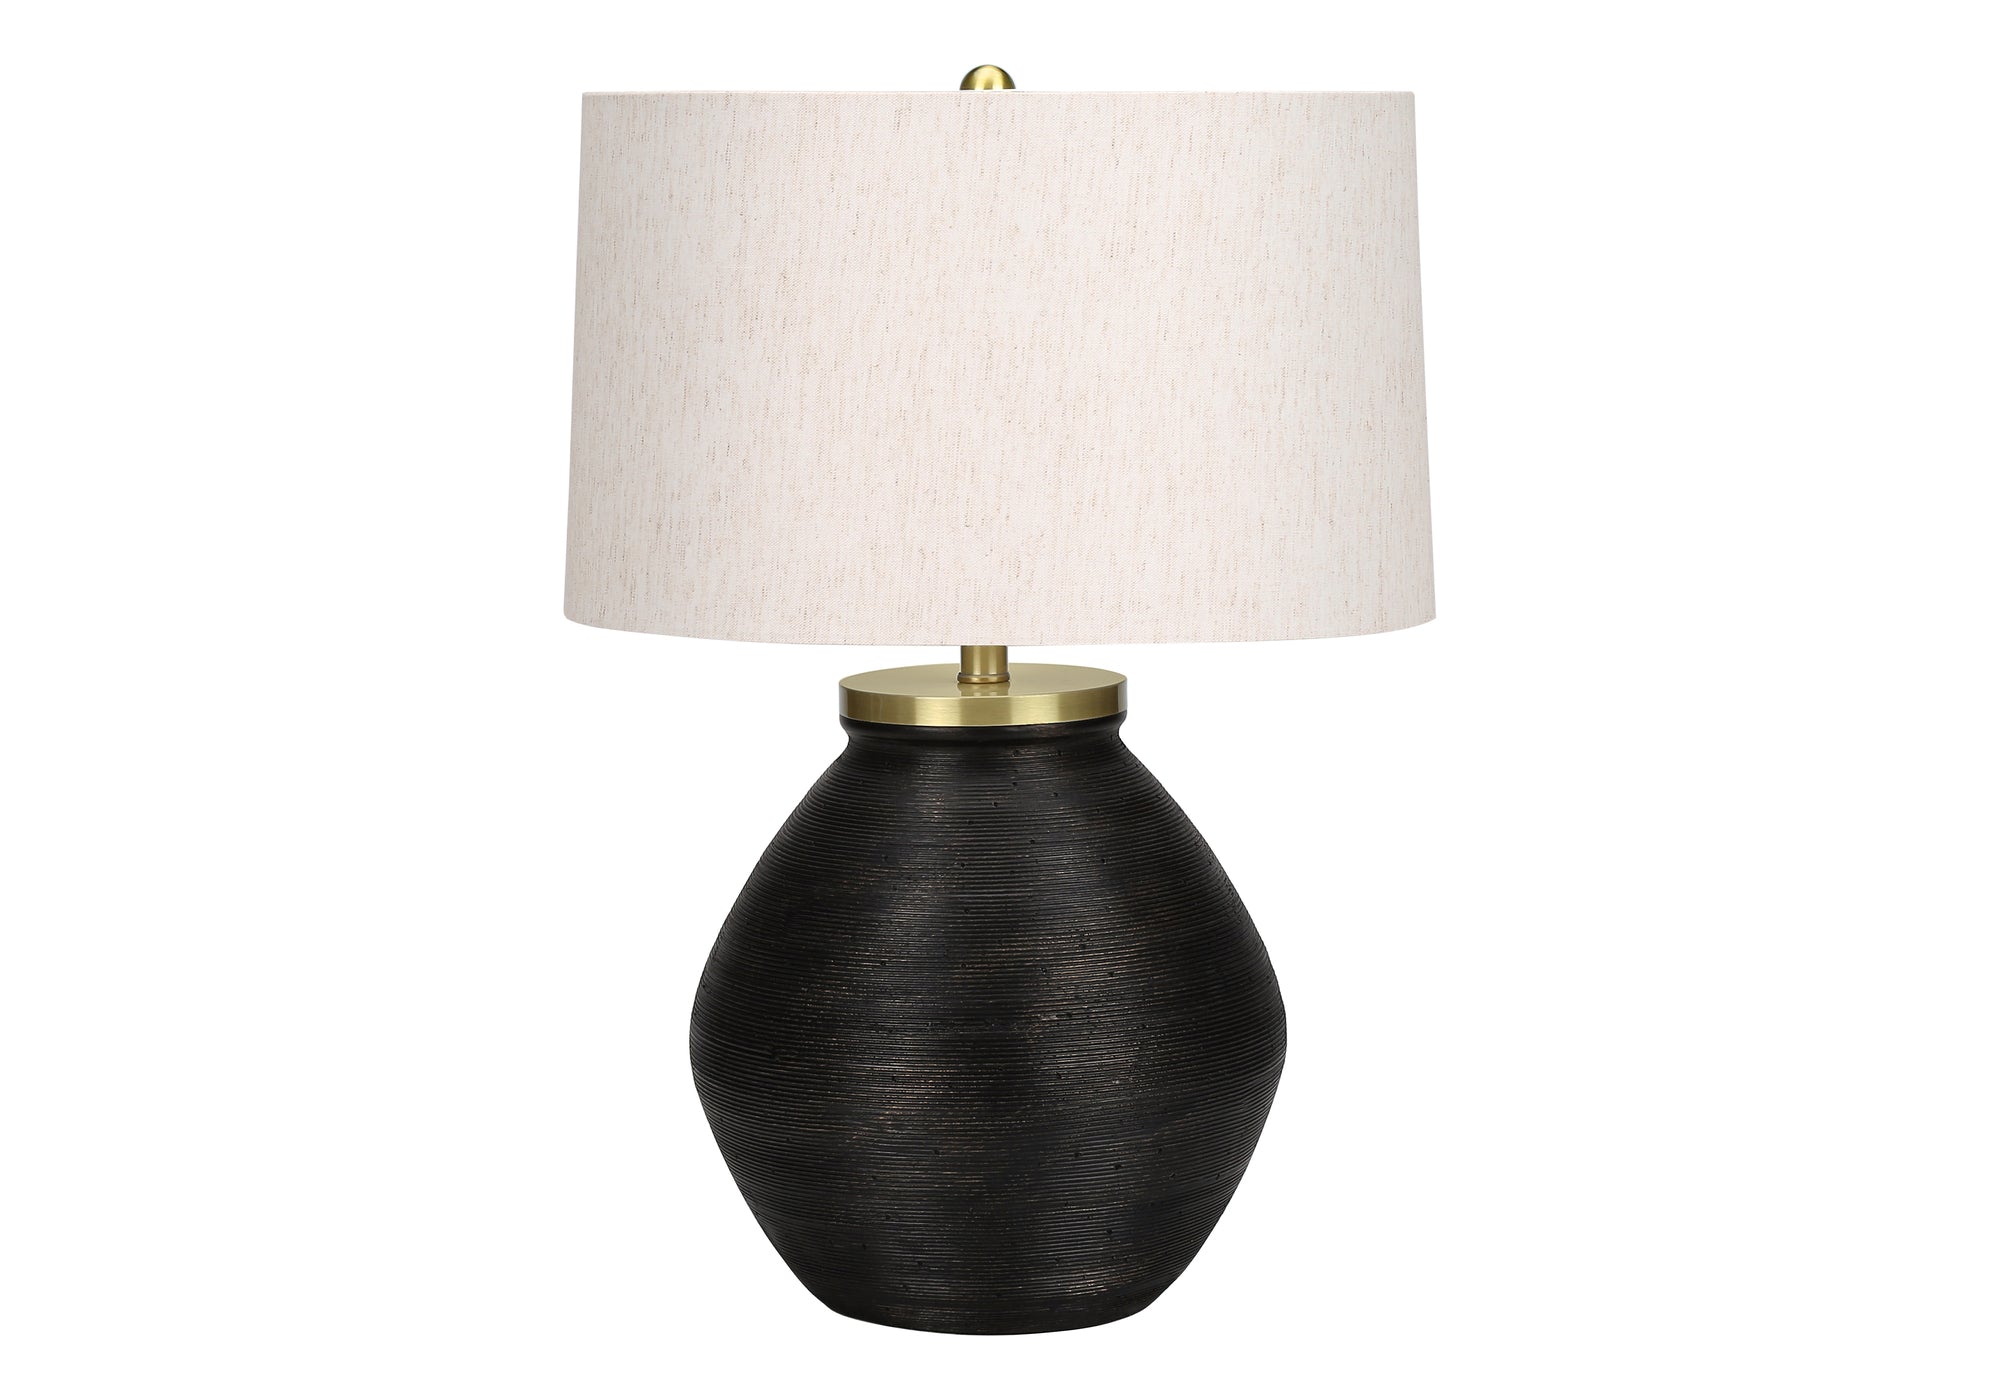 MN-499715    Lighting, 25"H, Table Lamp, Black Concrete, Ivory / Cream Shade, Contemporary